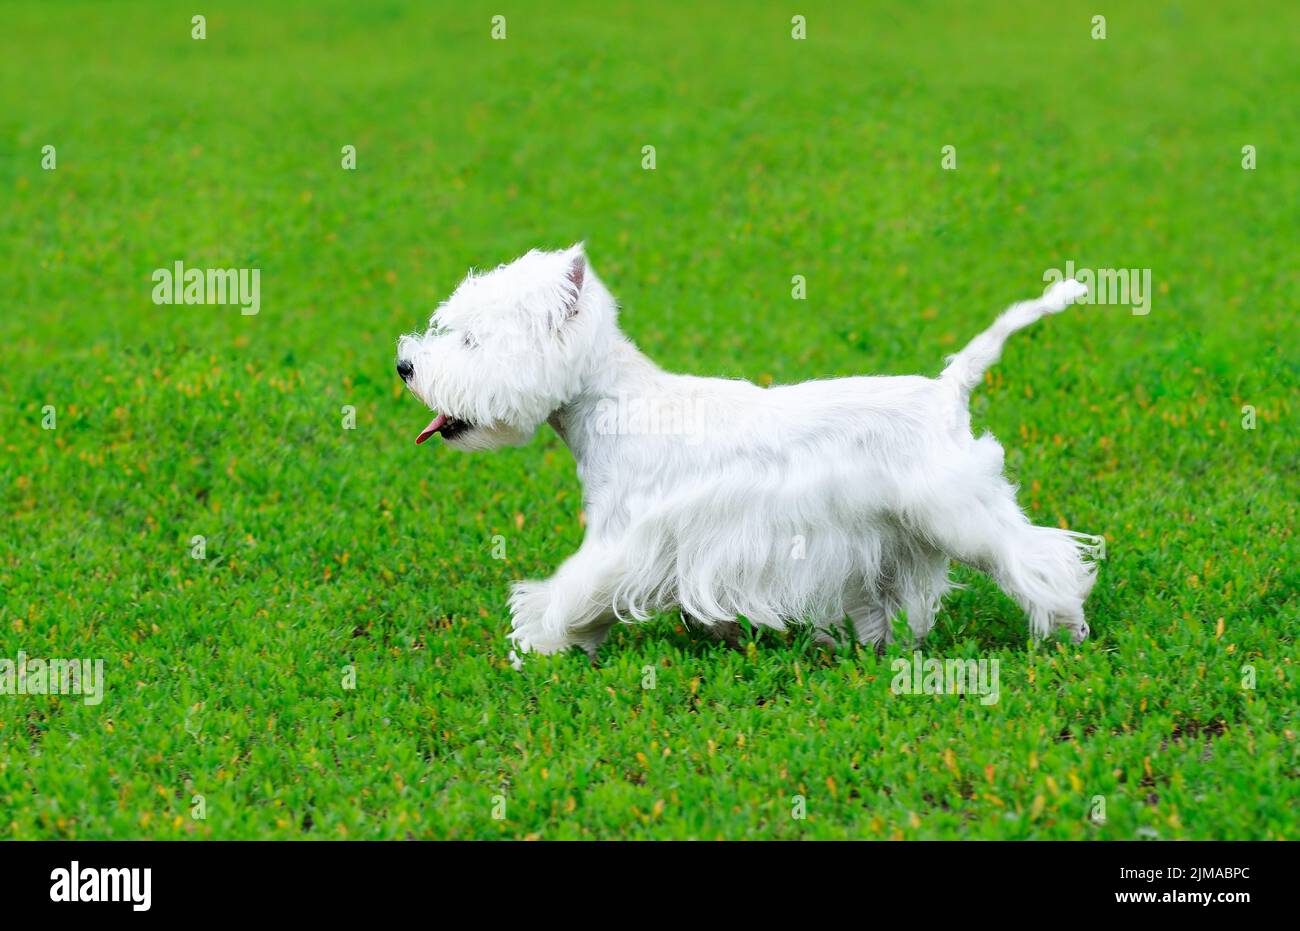 West highland bianco terrier cane che corre su erba verde Foto Stock